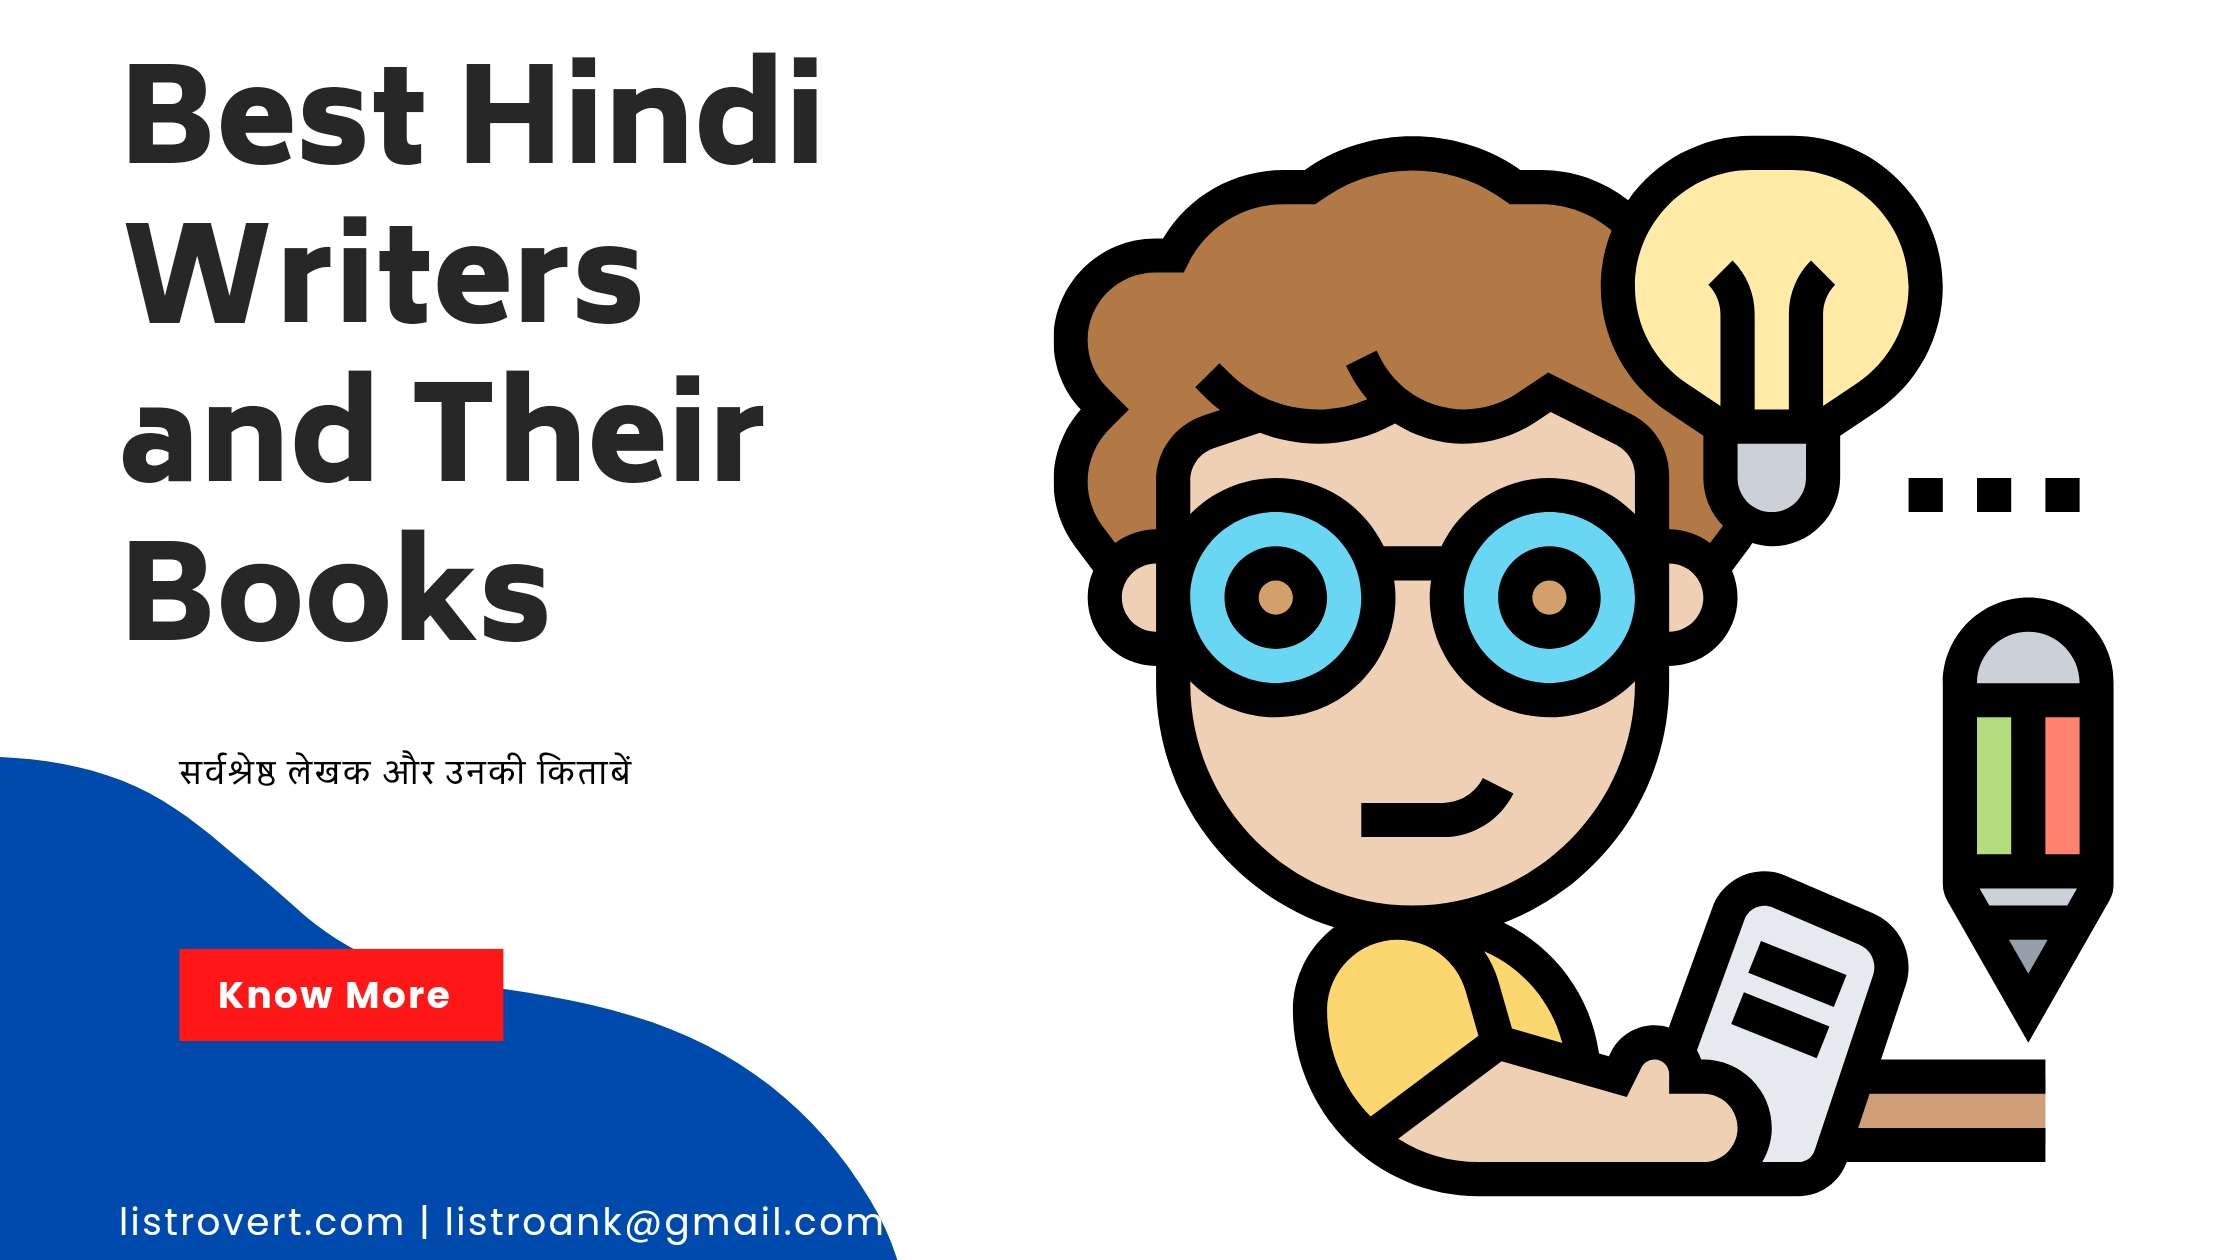 Hindi Writers and Books